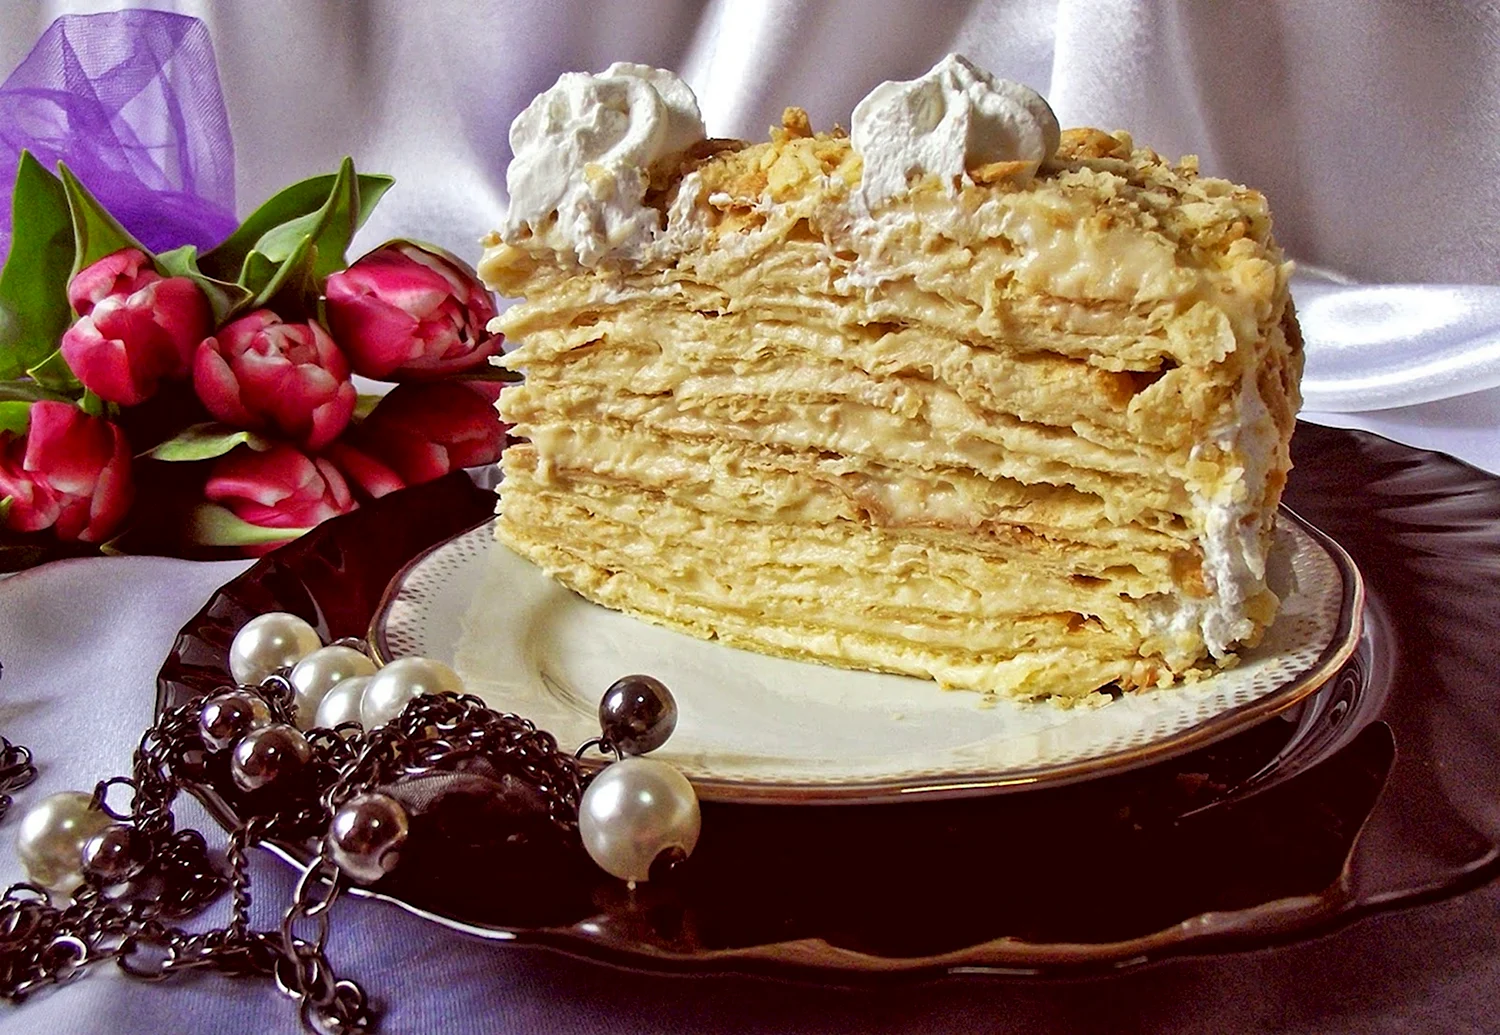 Наполеон Бонапарт торт